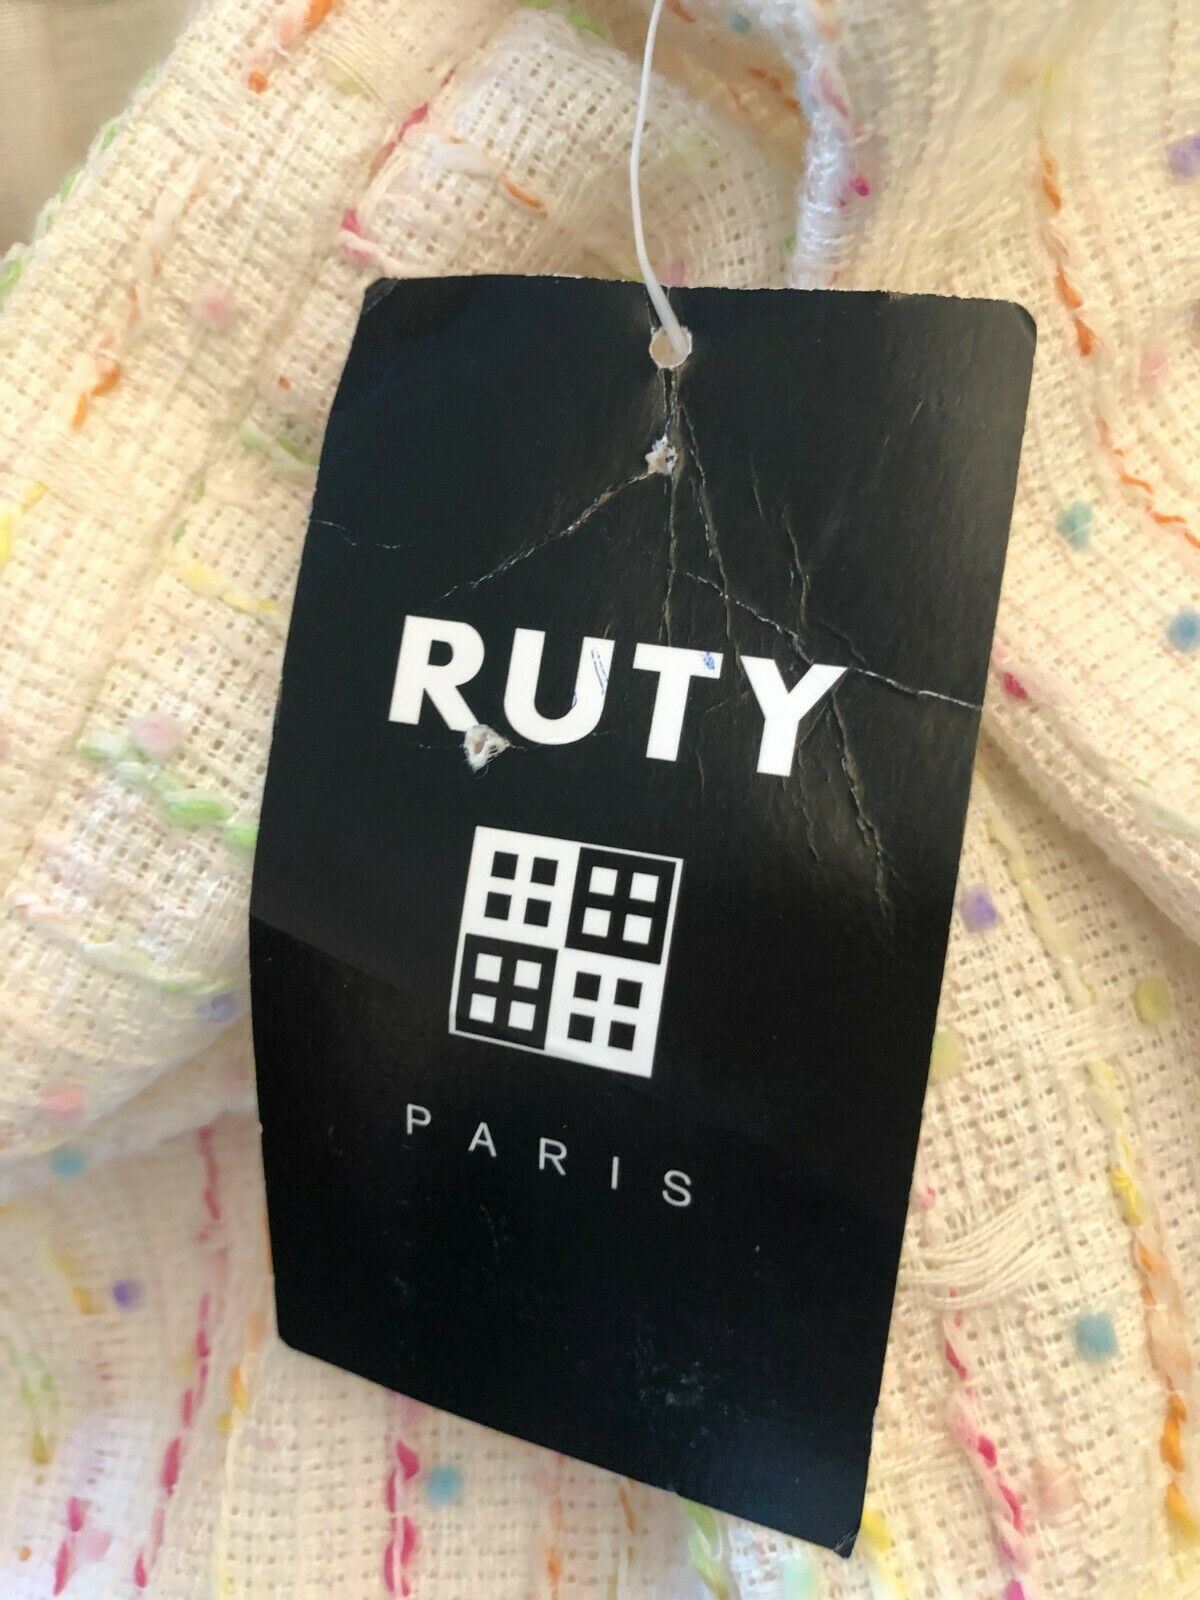 RUTY Paris White & Multicoloured Fleck Tweed Midi Pencil Skirt UK 10/12 US 6/8 EU 38/40 IT 42 BNWT RRP £149 Timeless Fashions